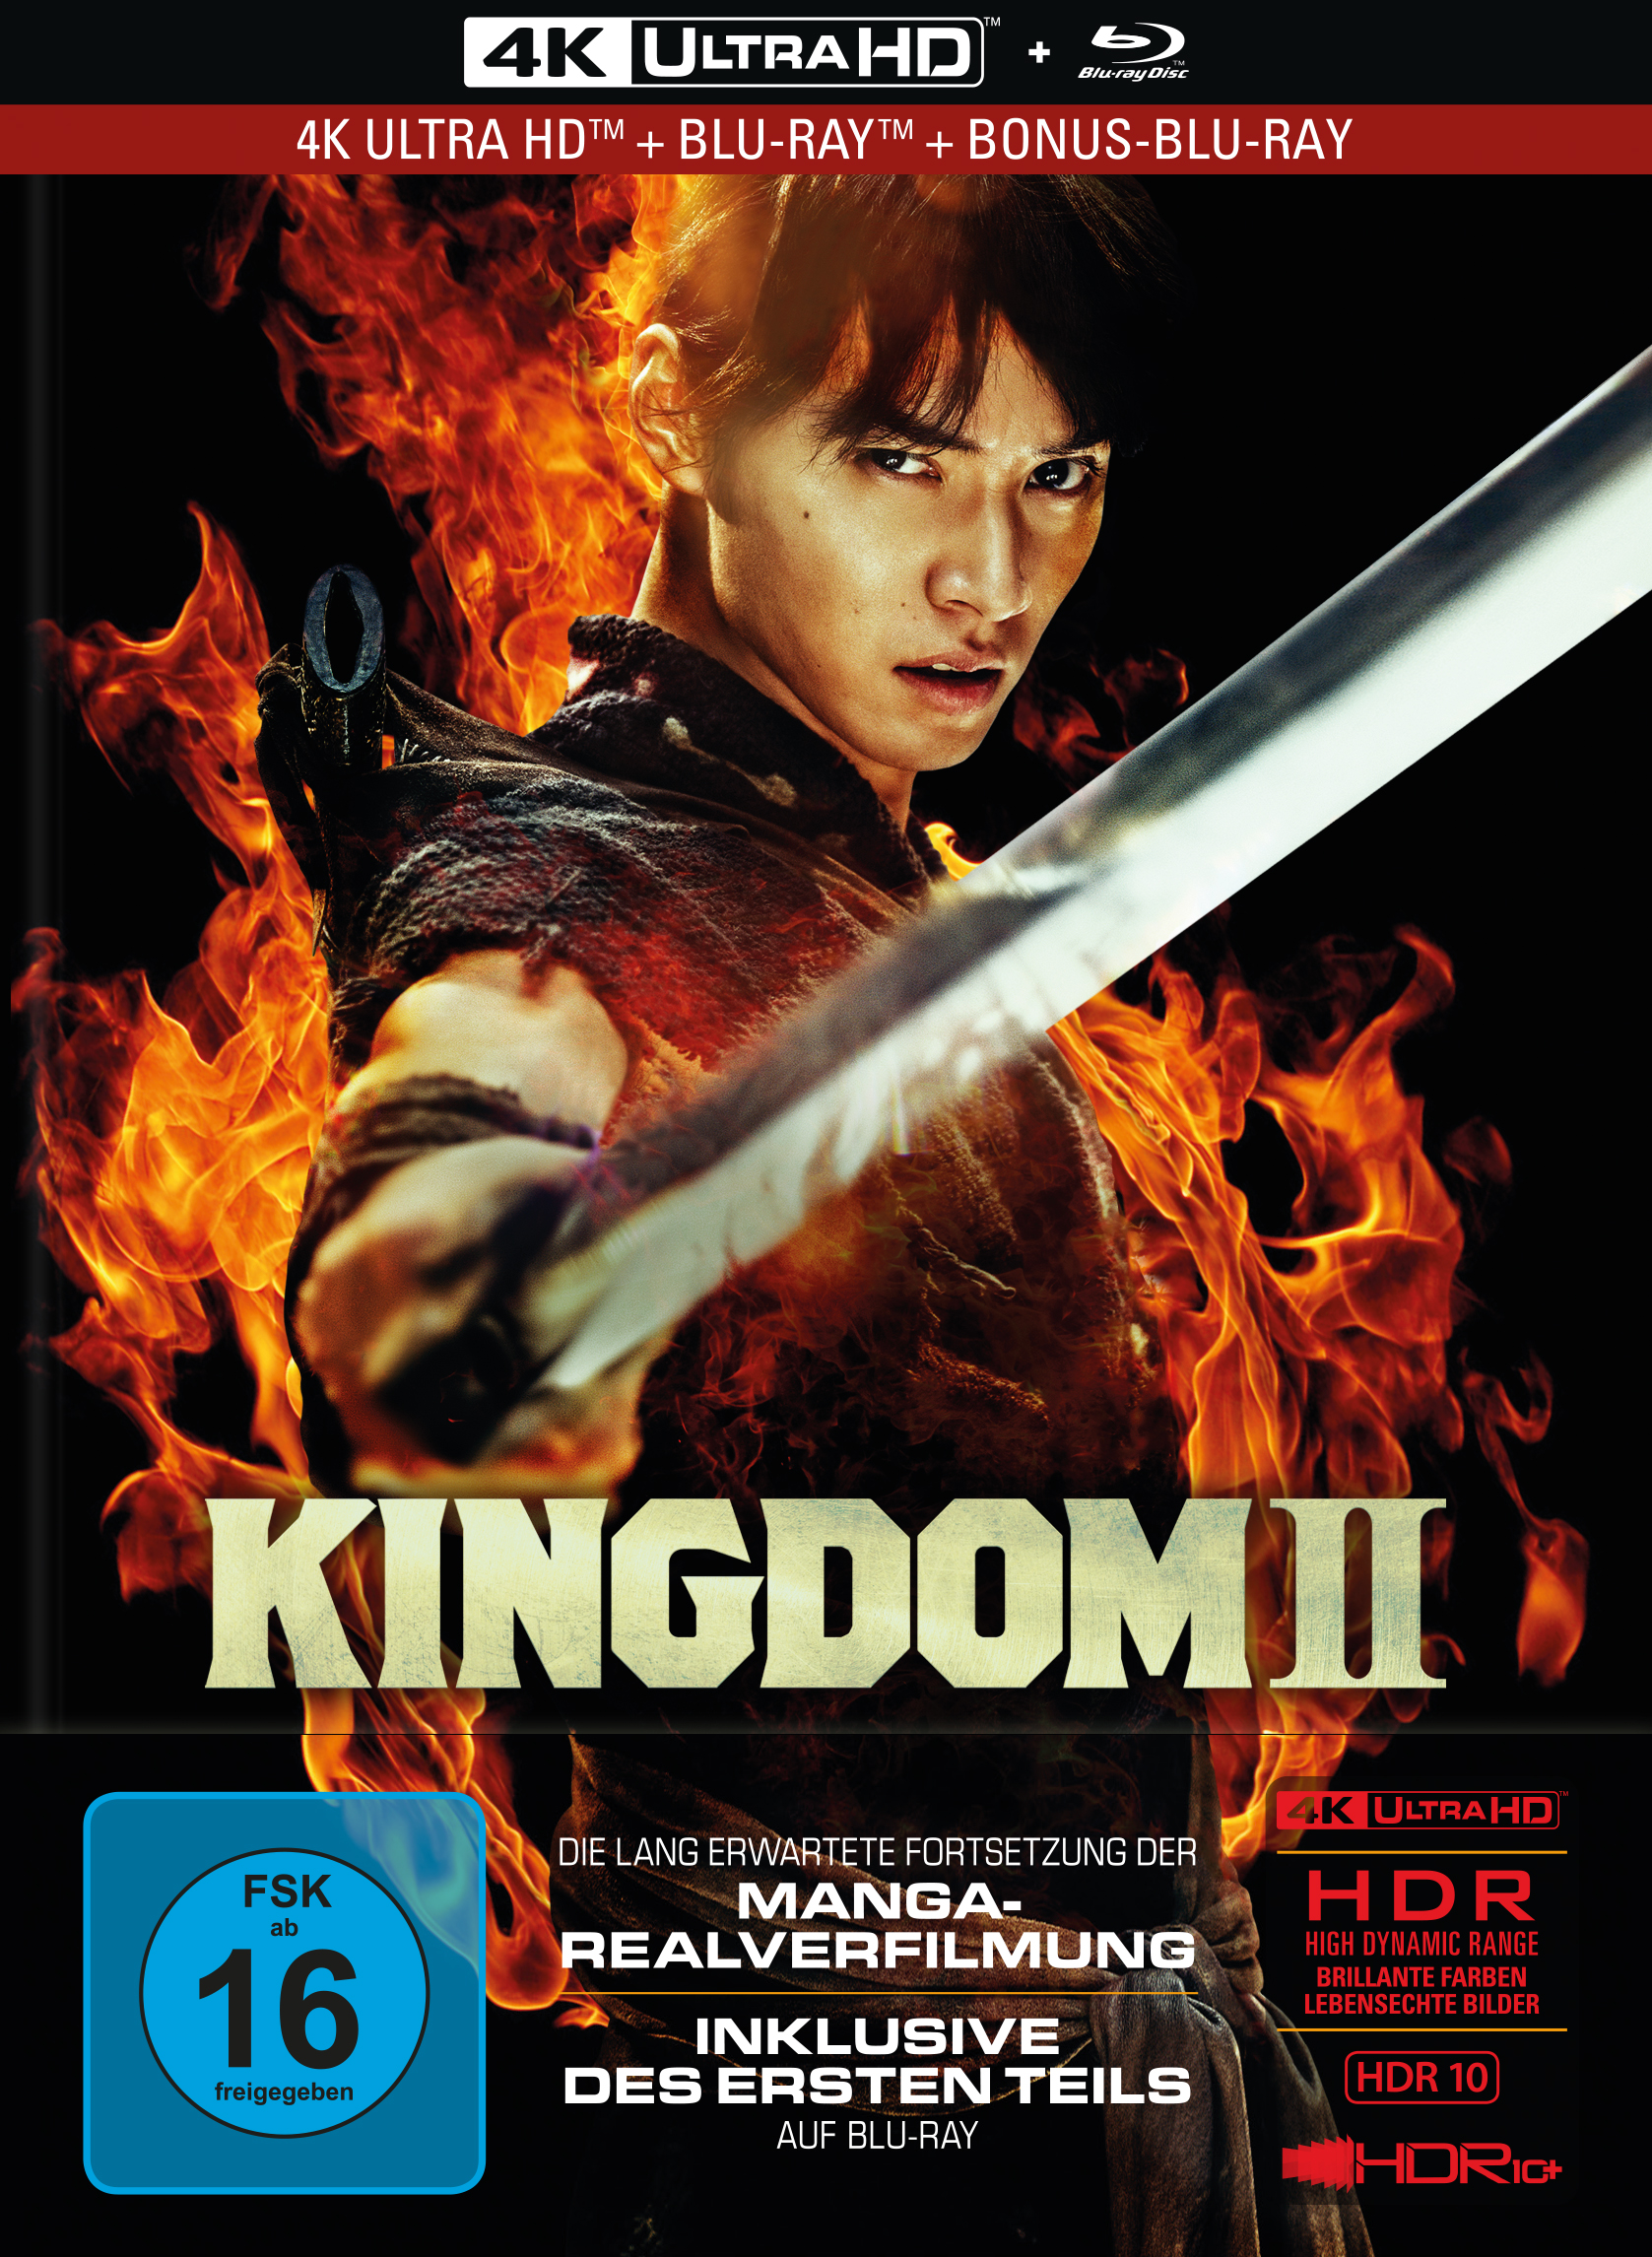 Kingdom 2 - Far and Away - 3-Disc Limited Collector's Edition im Mediabook (UHD-Blu-ray + Blu-ray + Bonus-Blu-ray)